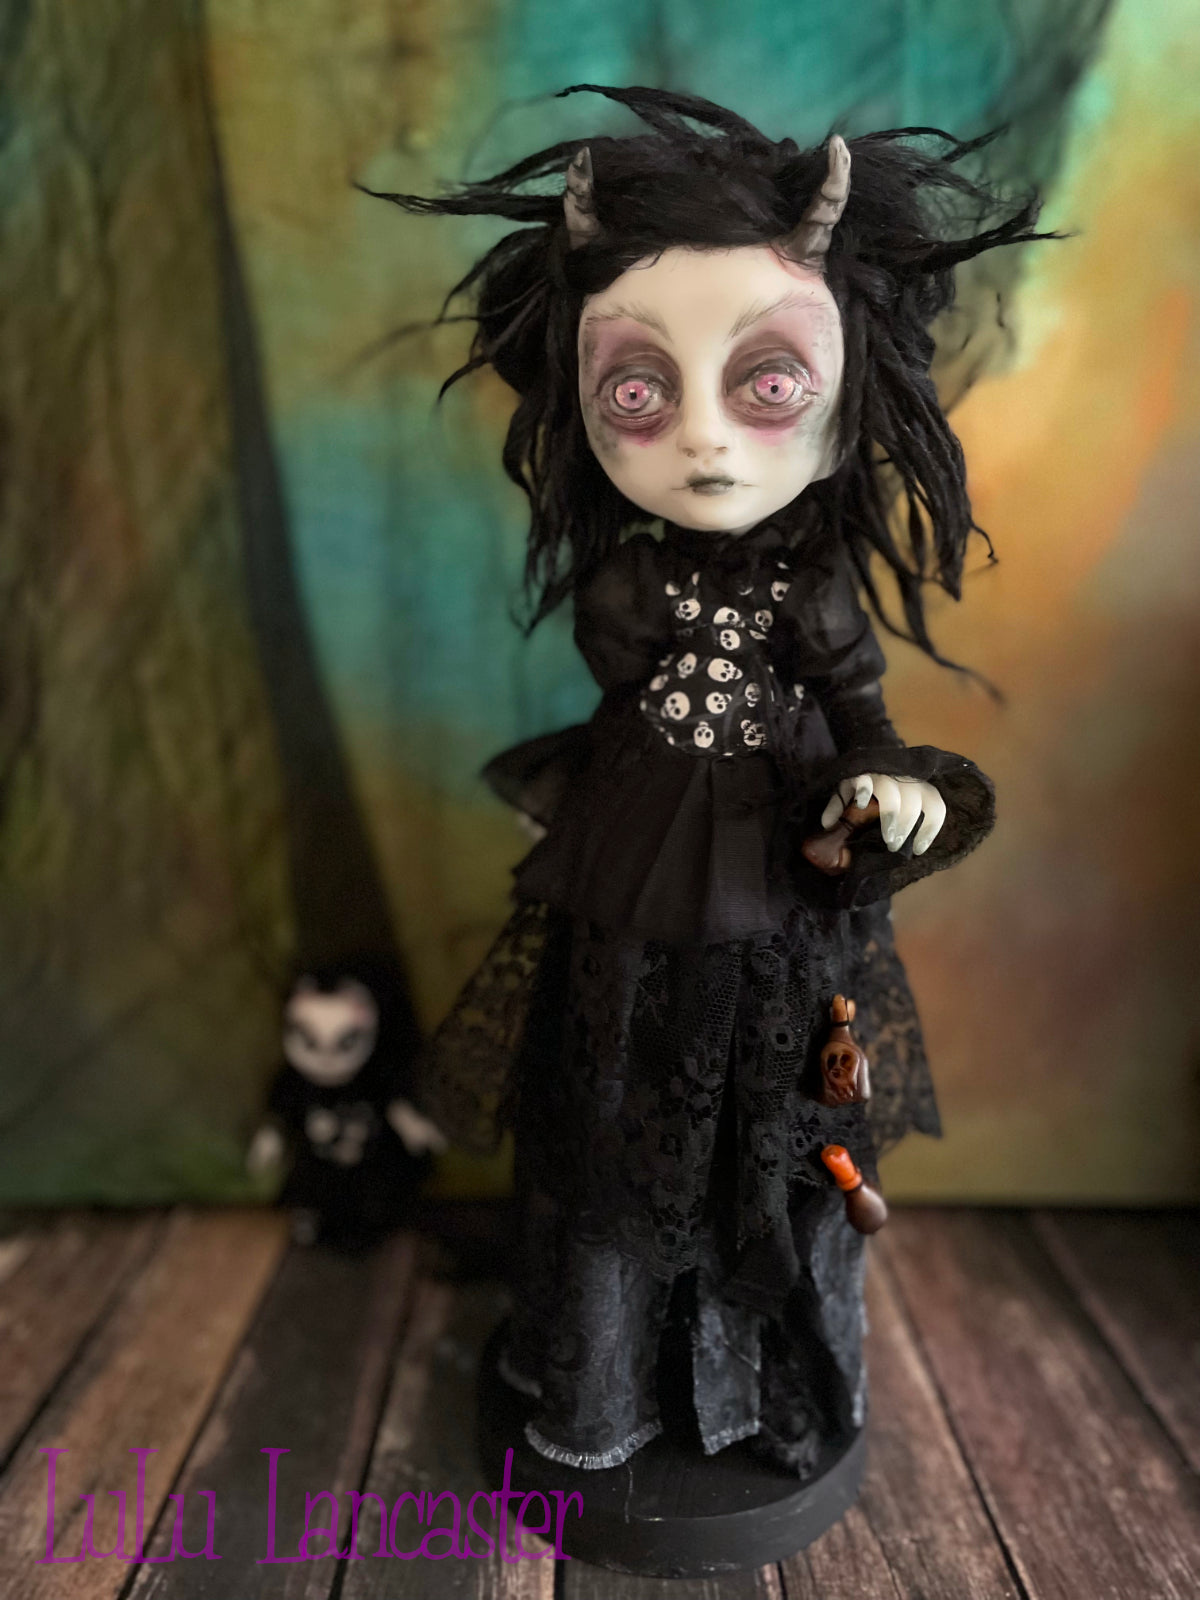 Petronella the Dark Witch  Original LuLu Lancaster Art Doll